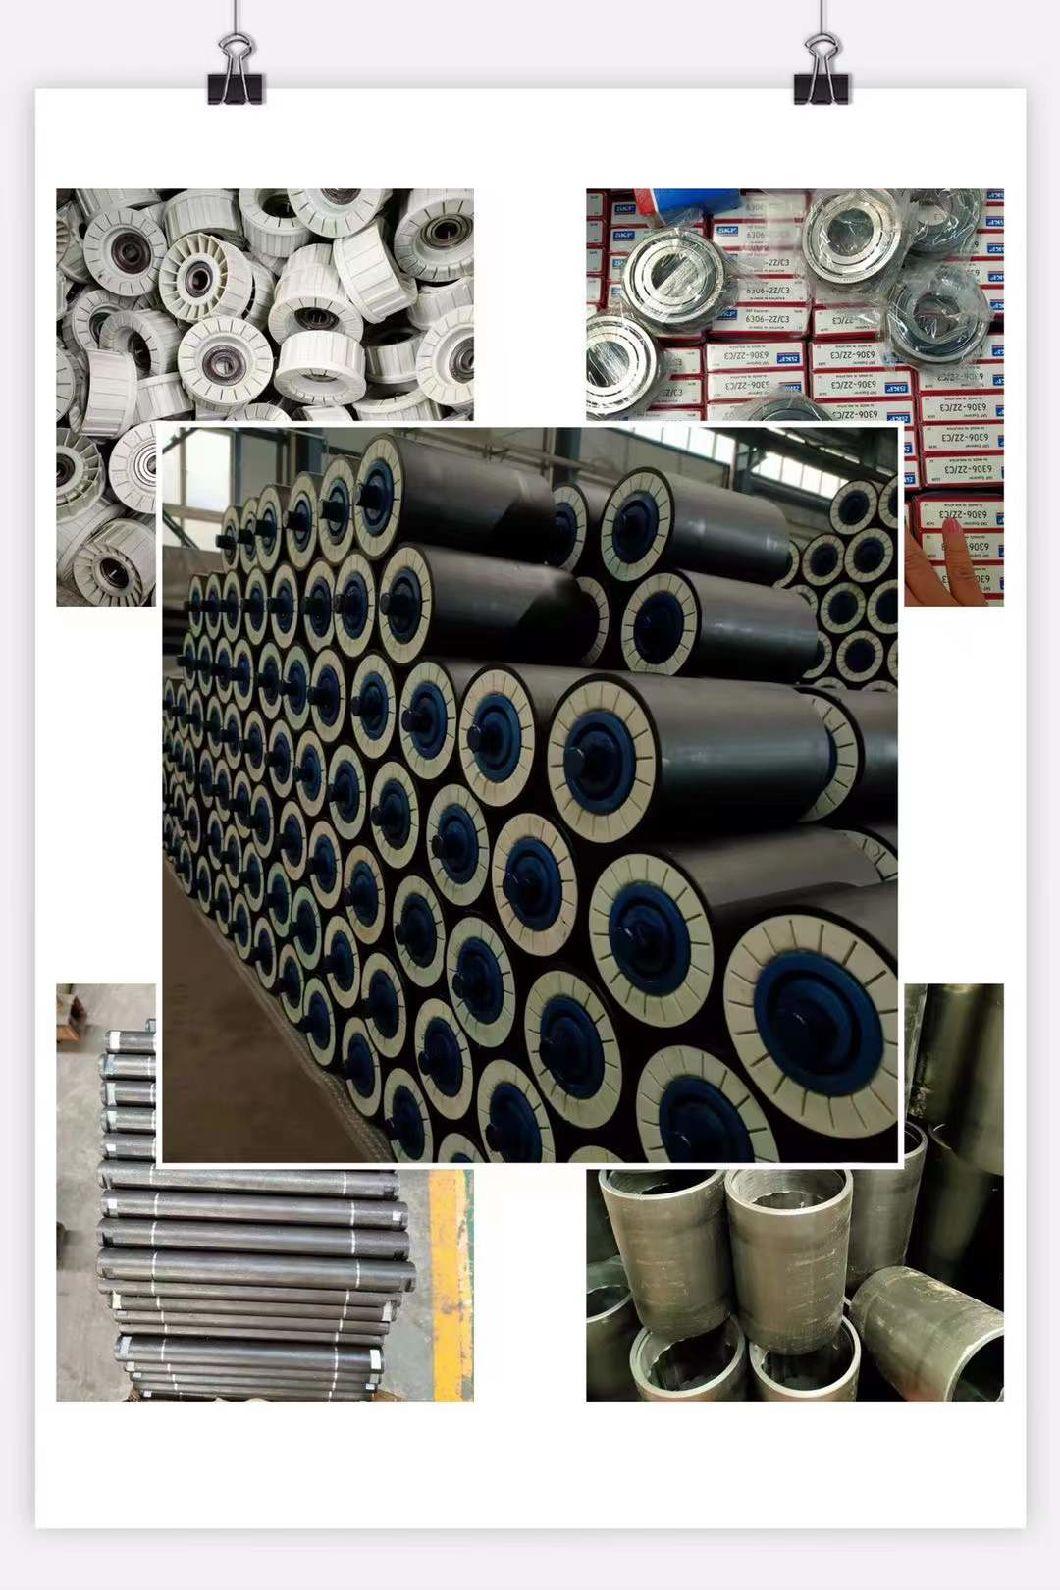 HDPE Conveyor Roller for Heavy Duty Industry Buy Conveyor Rollers